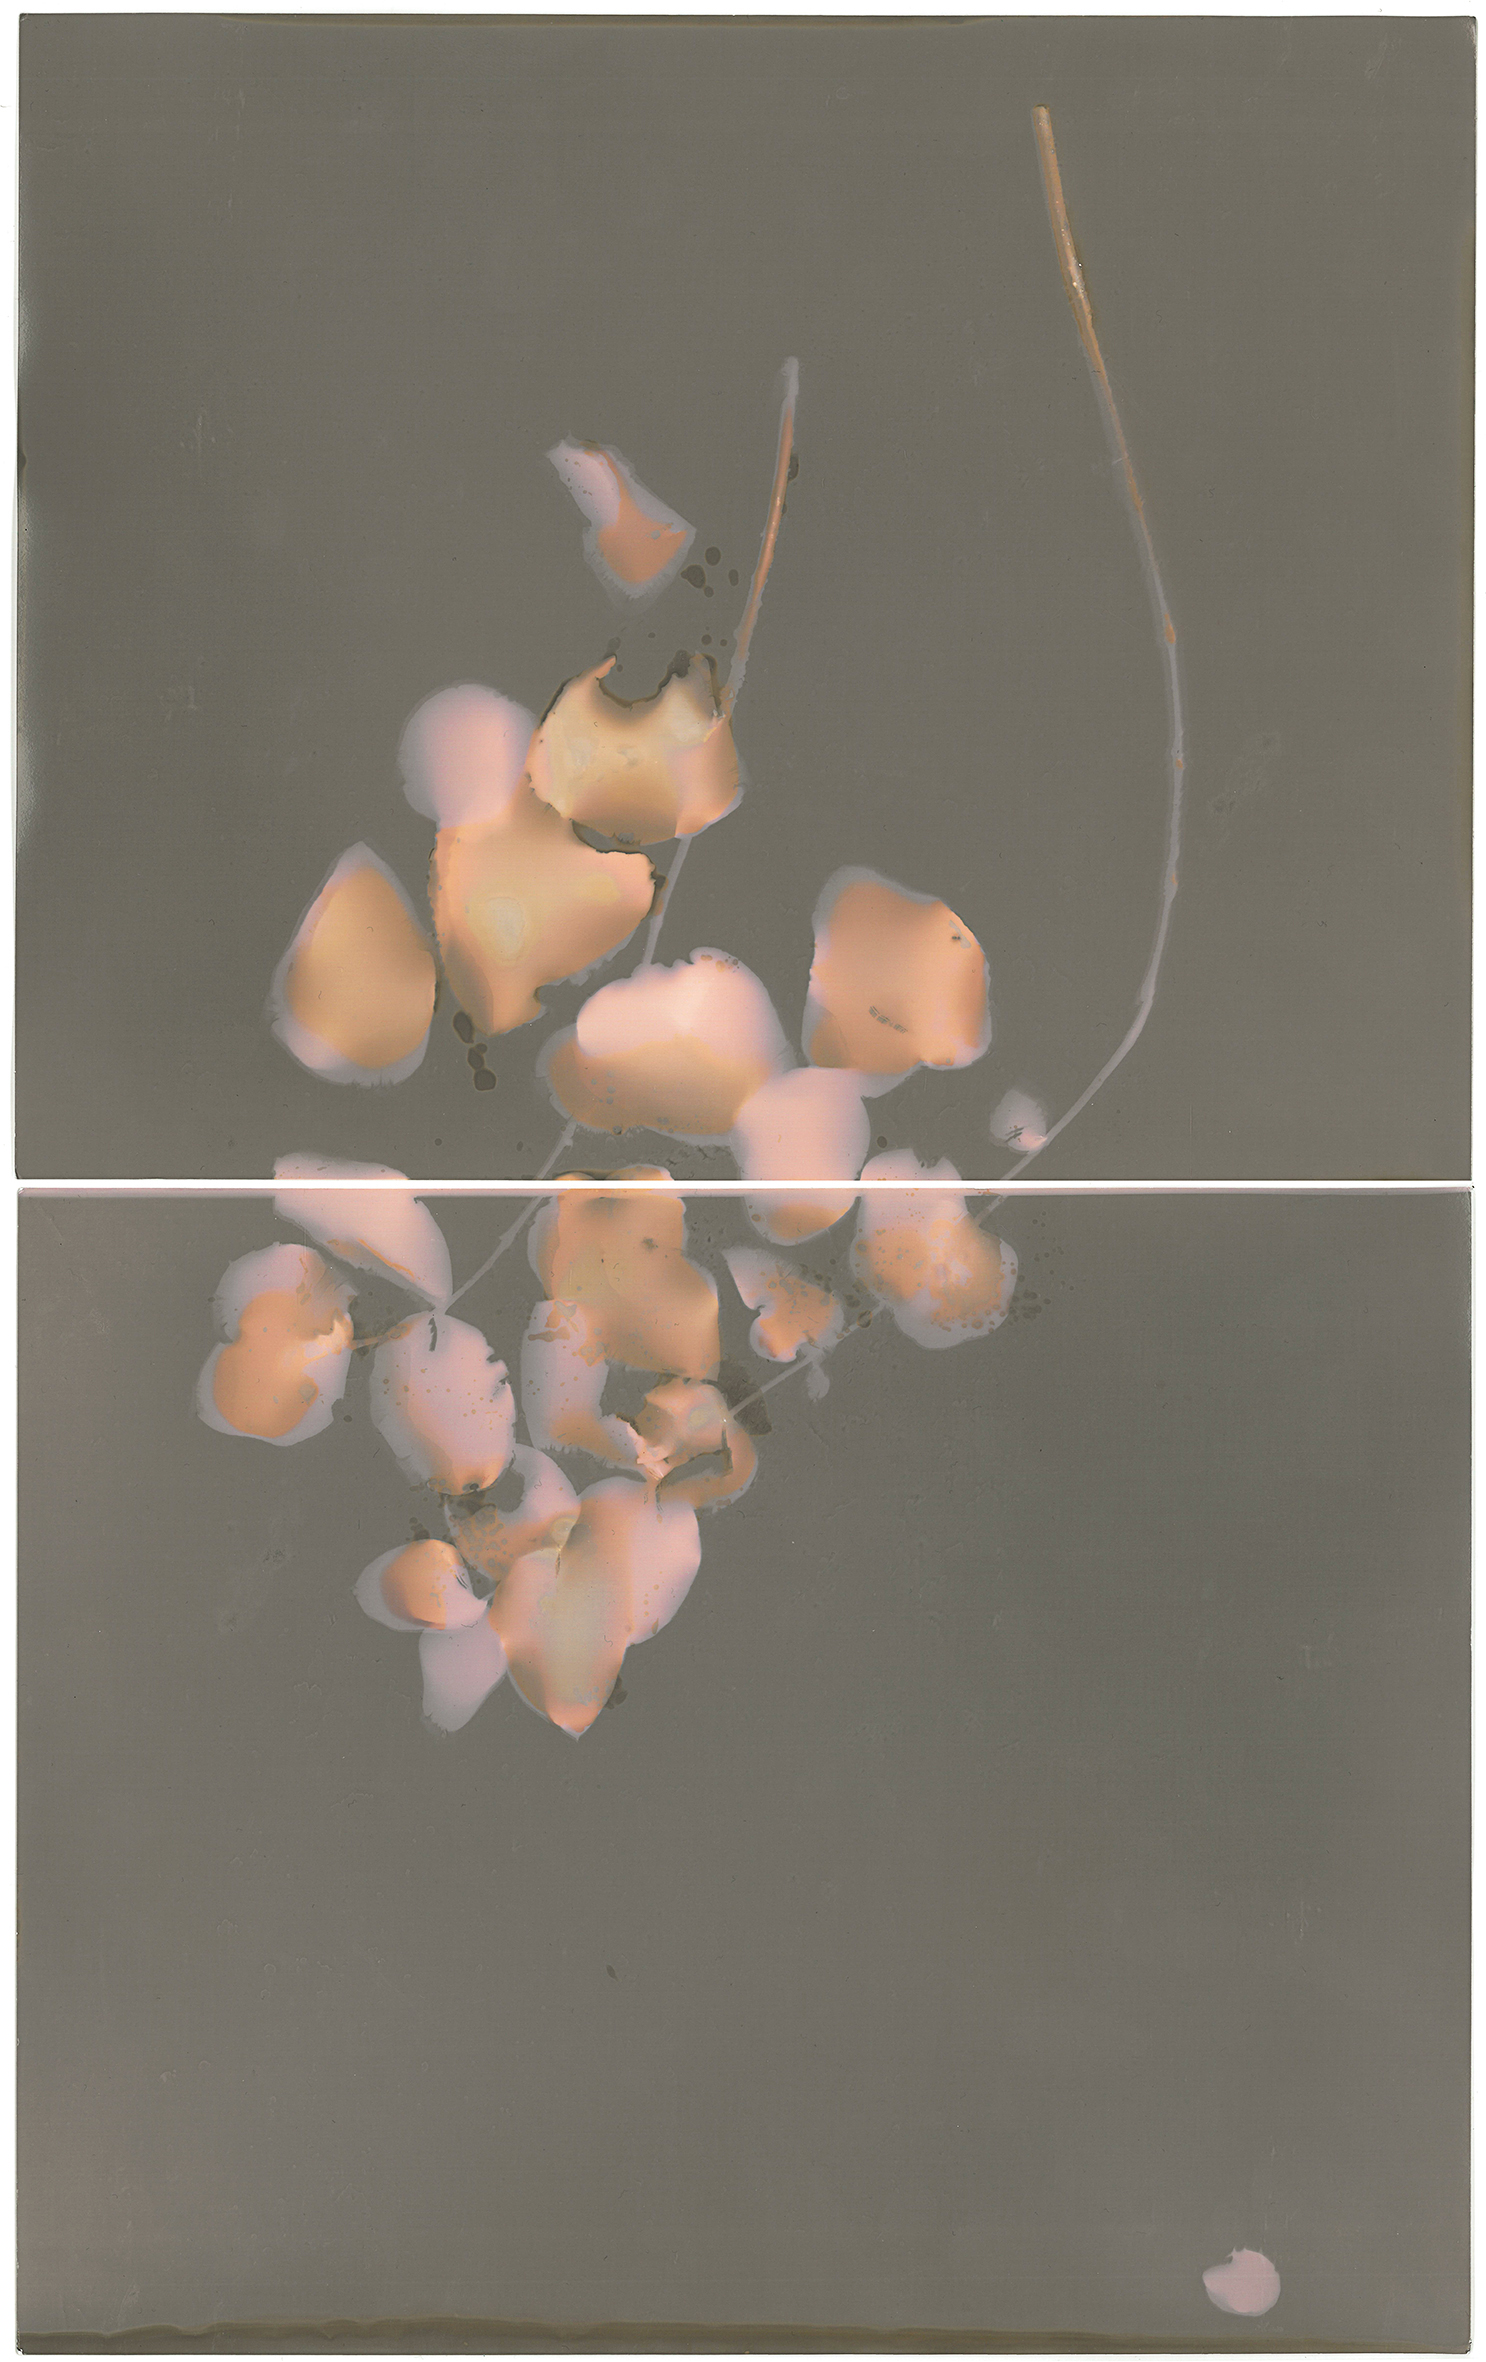  Stephanie Richter  Untitled (backyard lumen experiment 5 - Eucalyptus)&nbsp; &nbsp;2017 two gelatin silver prints 20.3 x 50.8 cm 